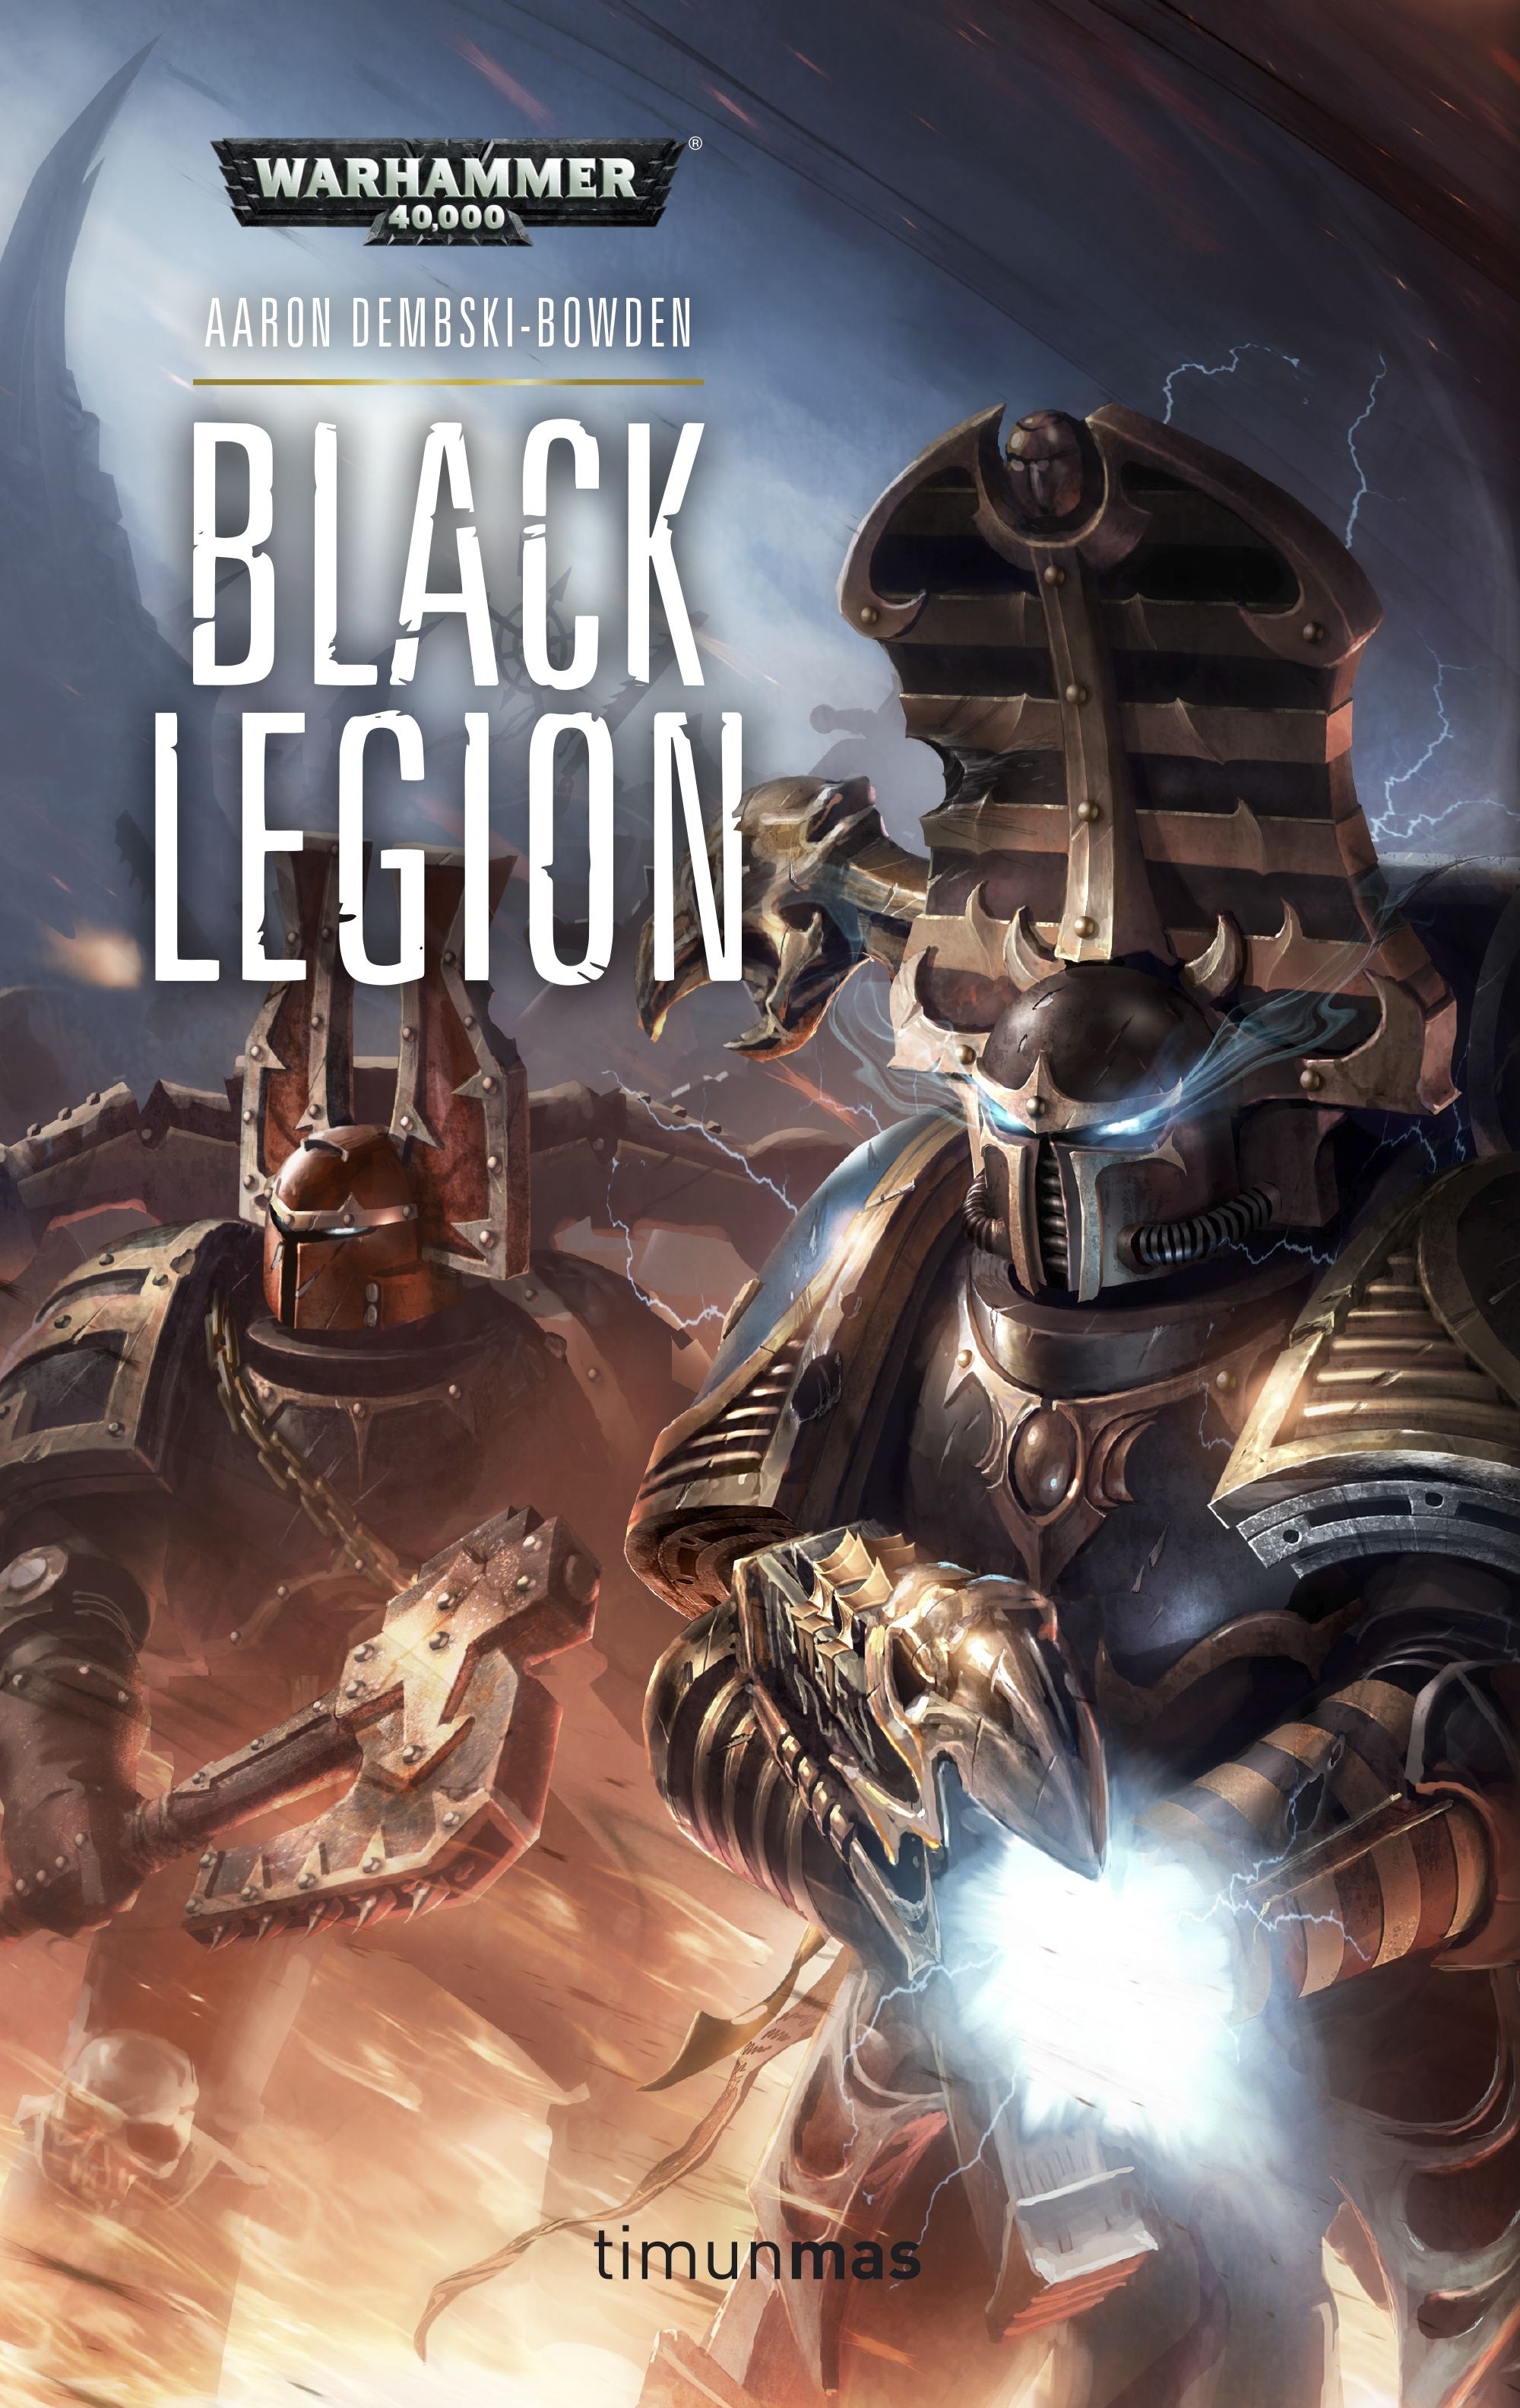 Black Legion "The Black Legion 2"